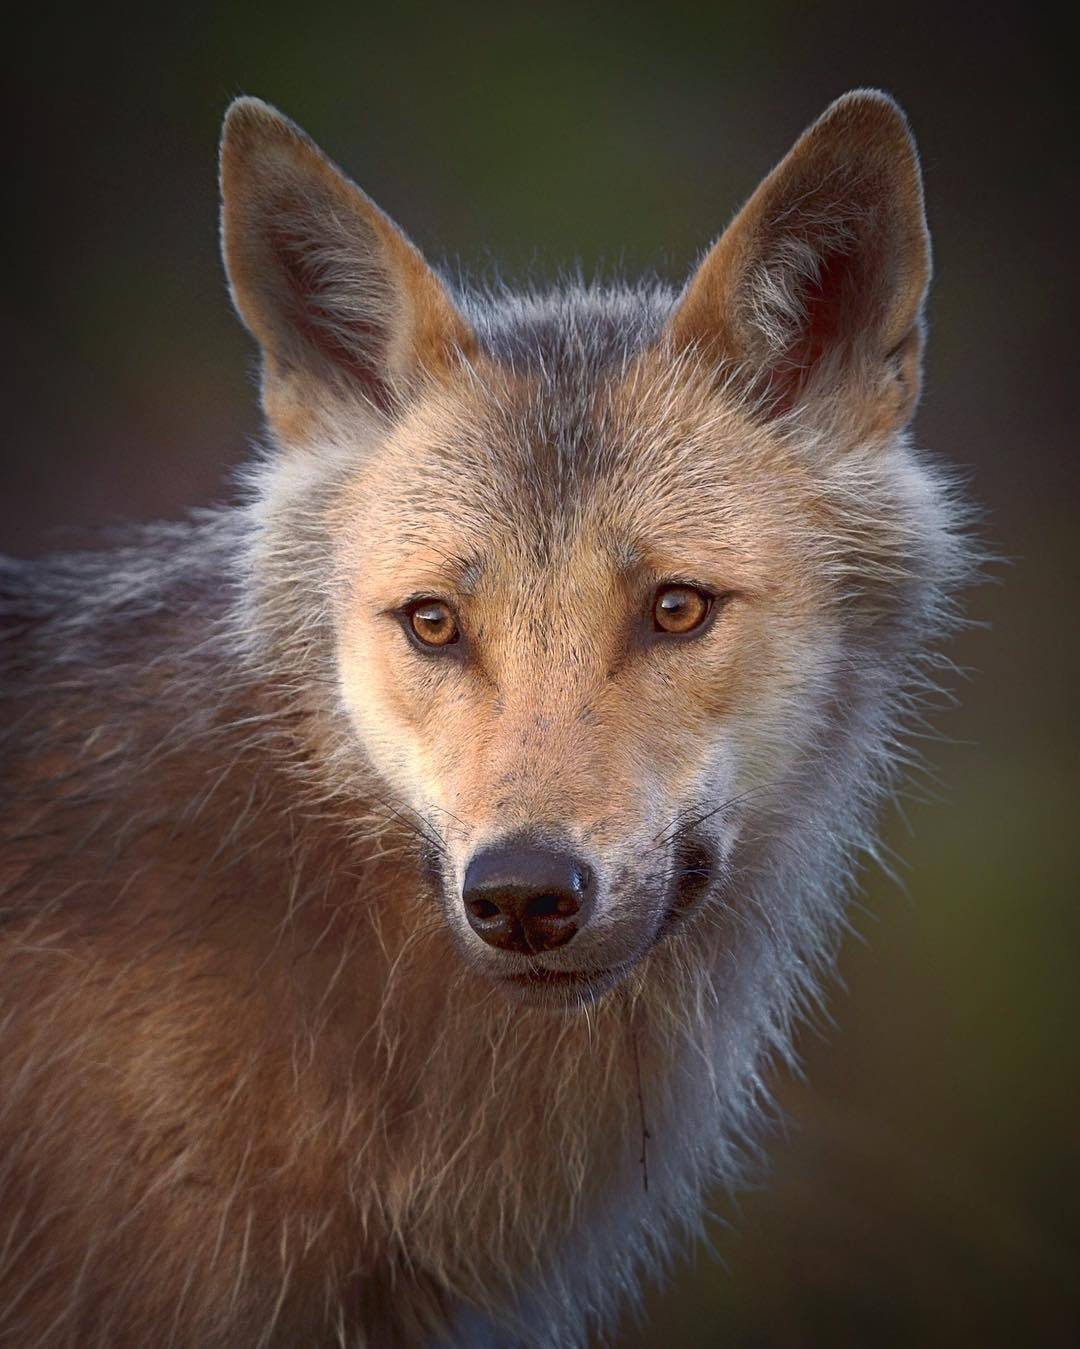 wolfsheart-blog:
“ Grey wolf (canis lupus) portrait by Niko Pekonen
”